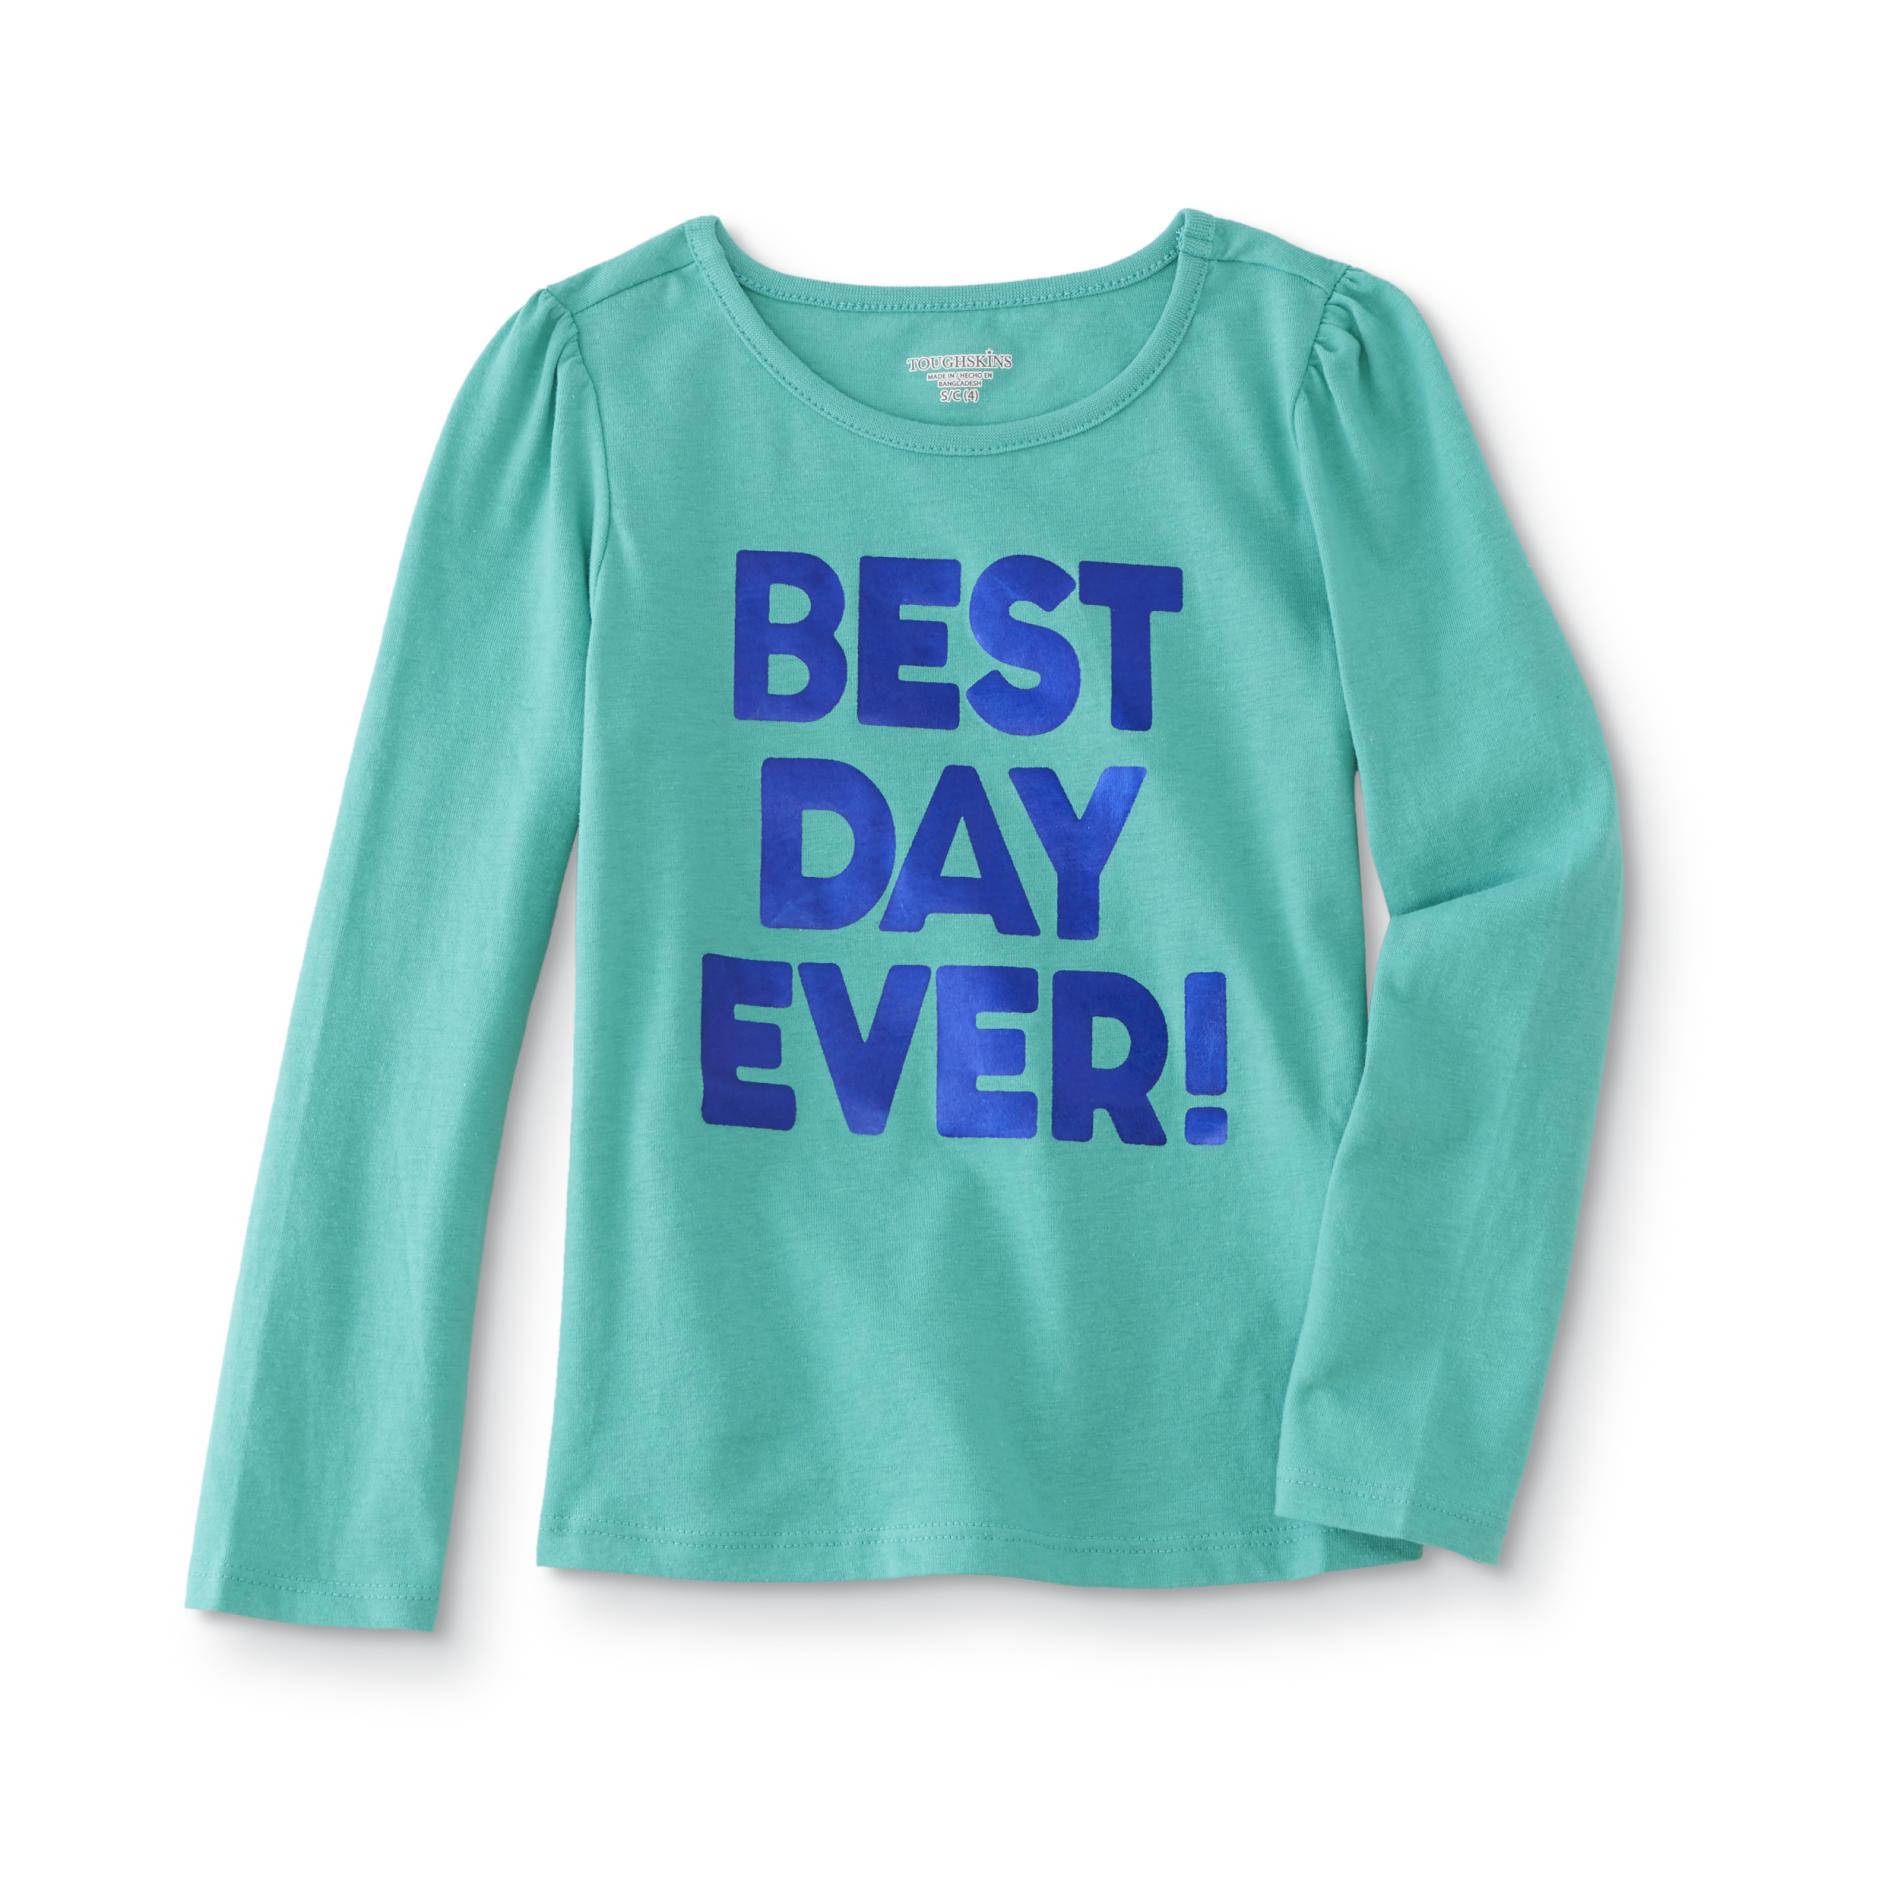 Toughskins Girls' Long-Sleeve Graphic T-Shirt - Best Day